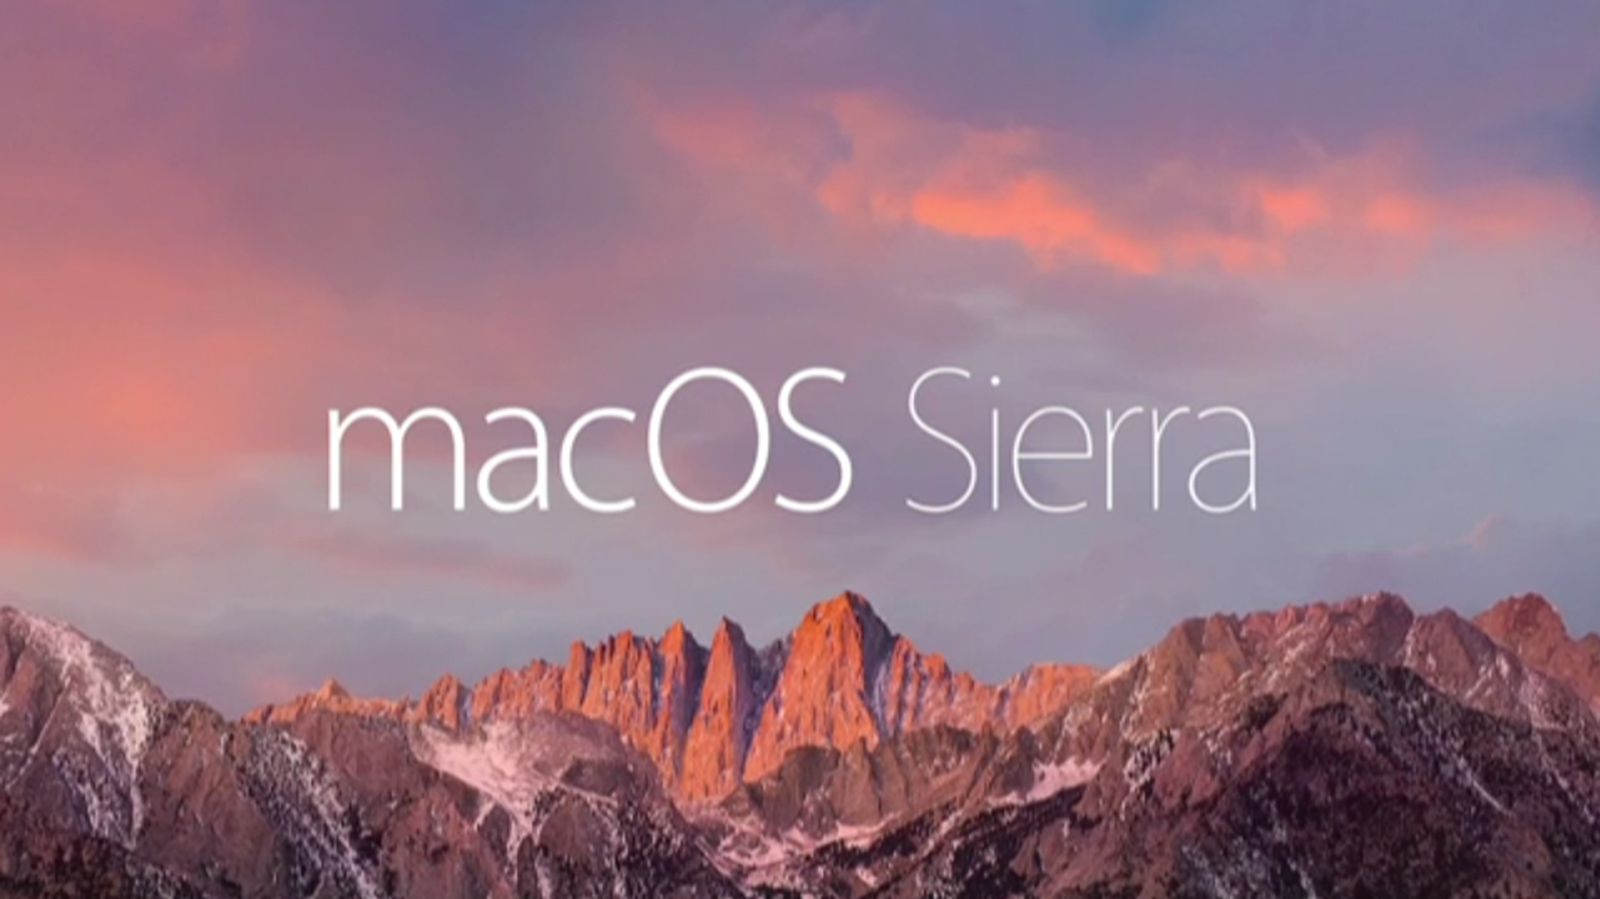 Mac os 10.13 sierra download